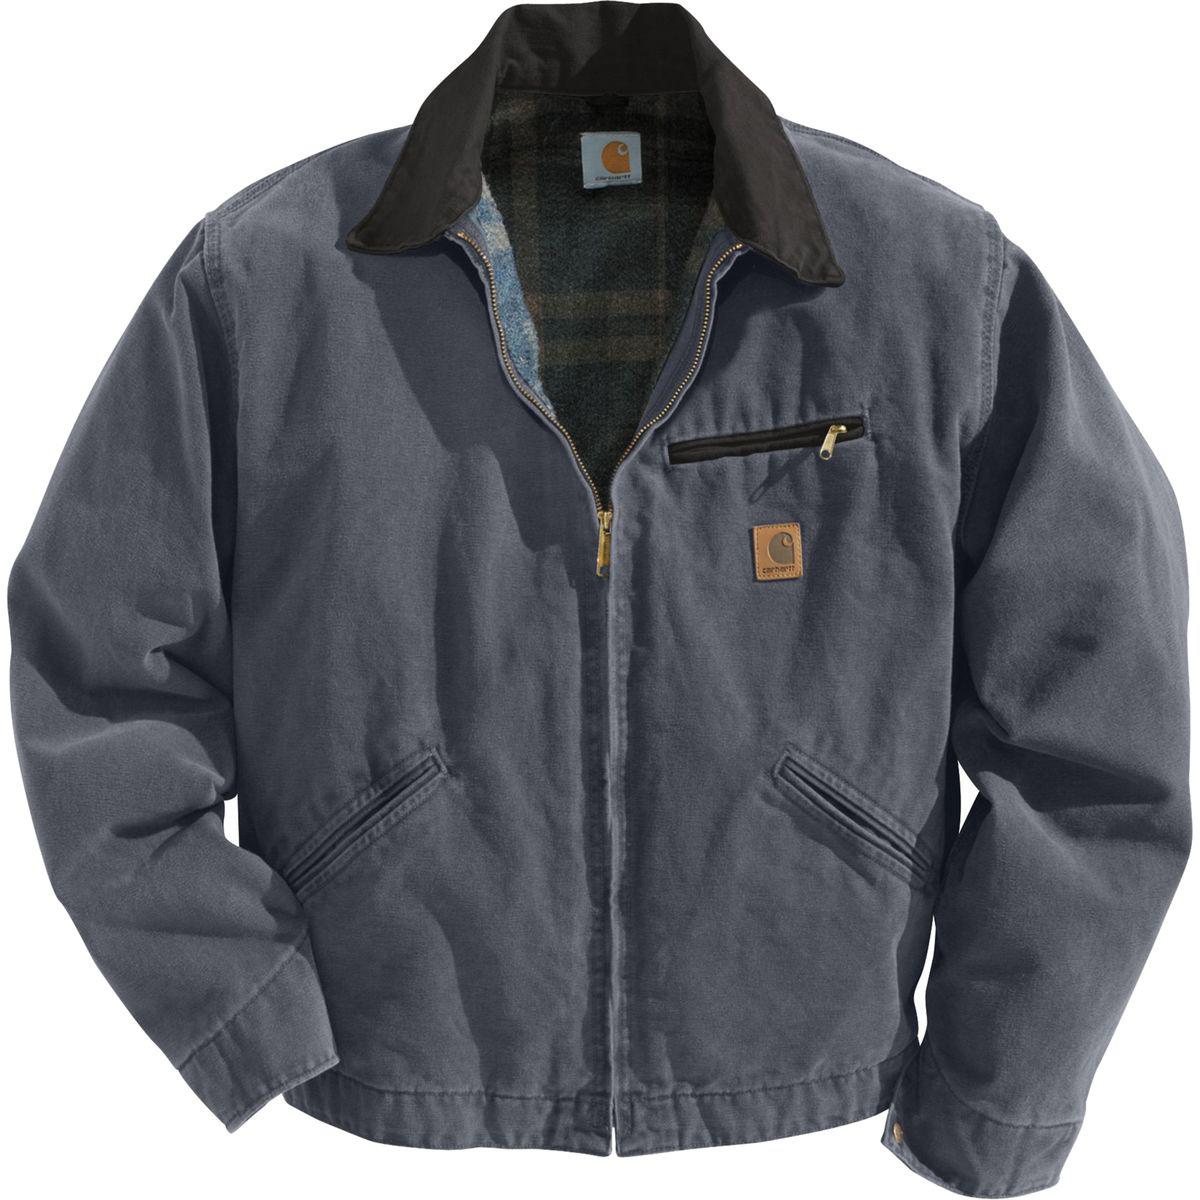 Carhartt Sandstone Jacket Online, 54% OFF | www.ingeniovirtual.com